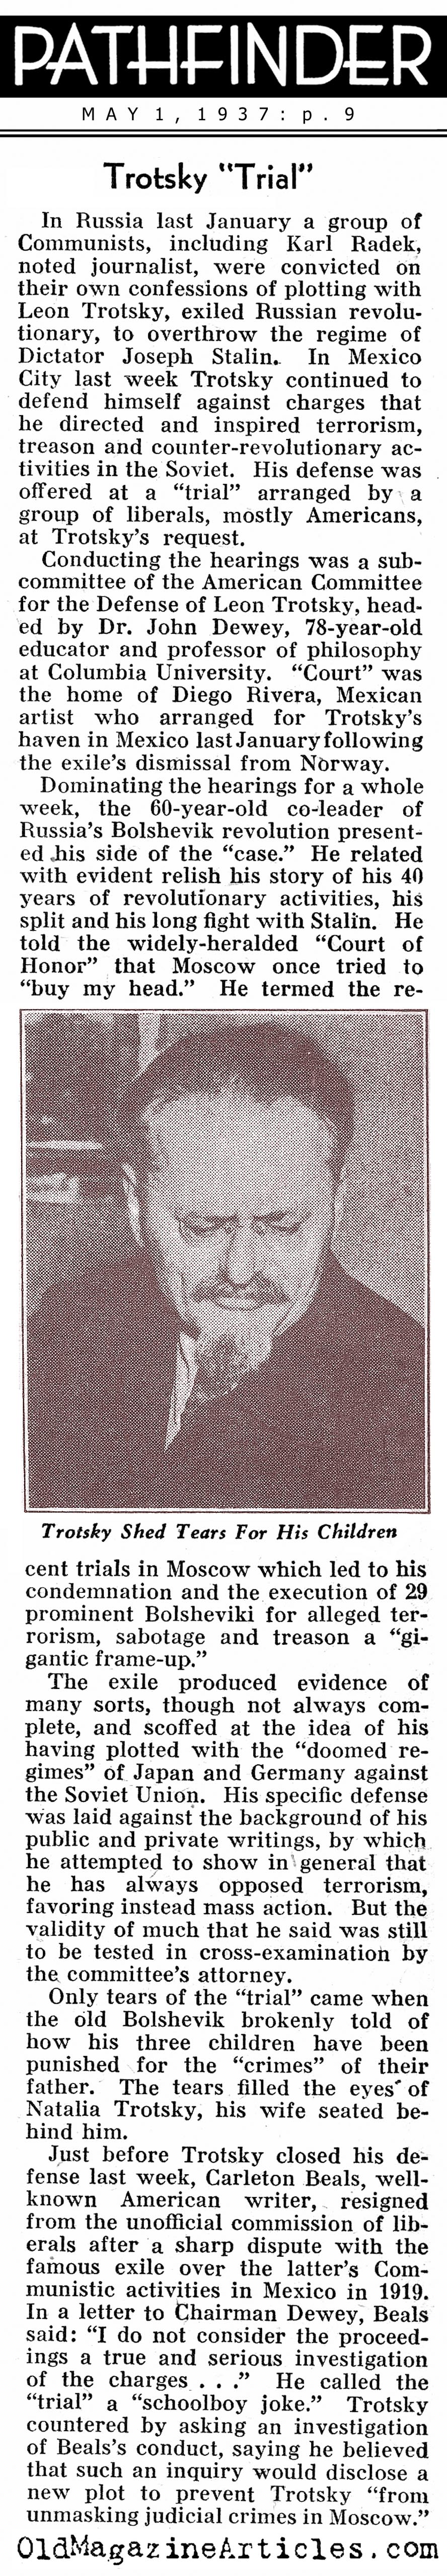 Stalin Puts Trotsky ''On Trial'' (Pathfinder Magazine, 1937)